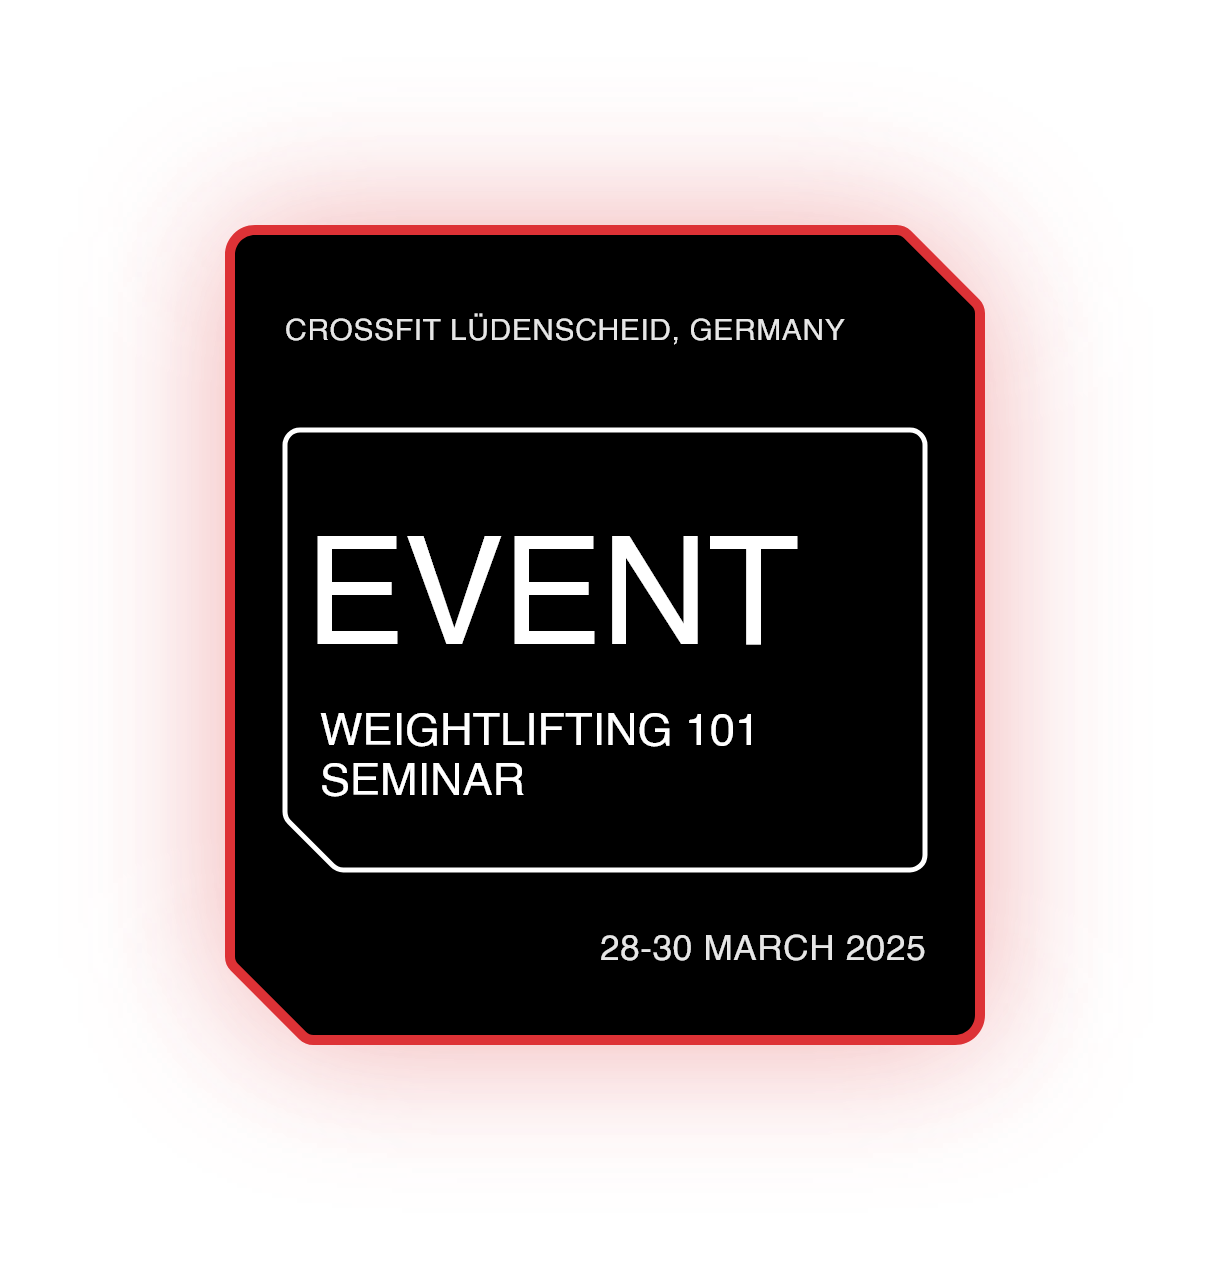 Weightlifting 101 Seminar - Altena, Germany